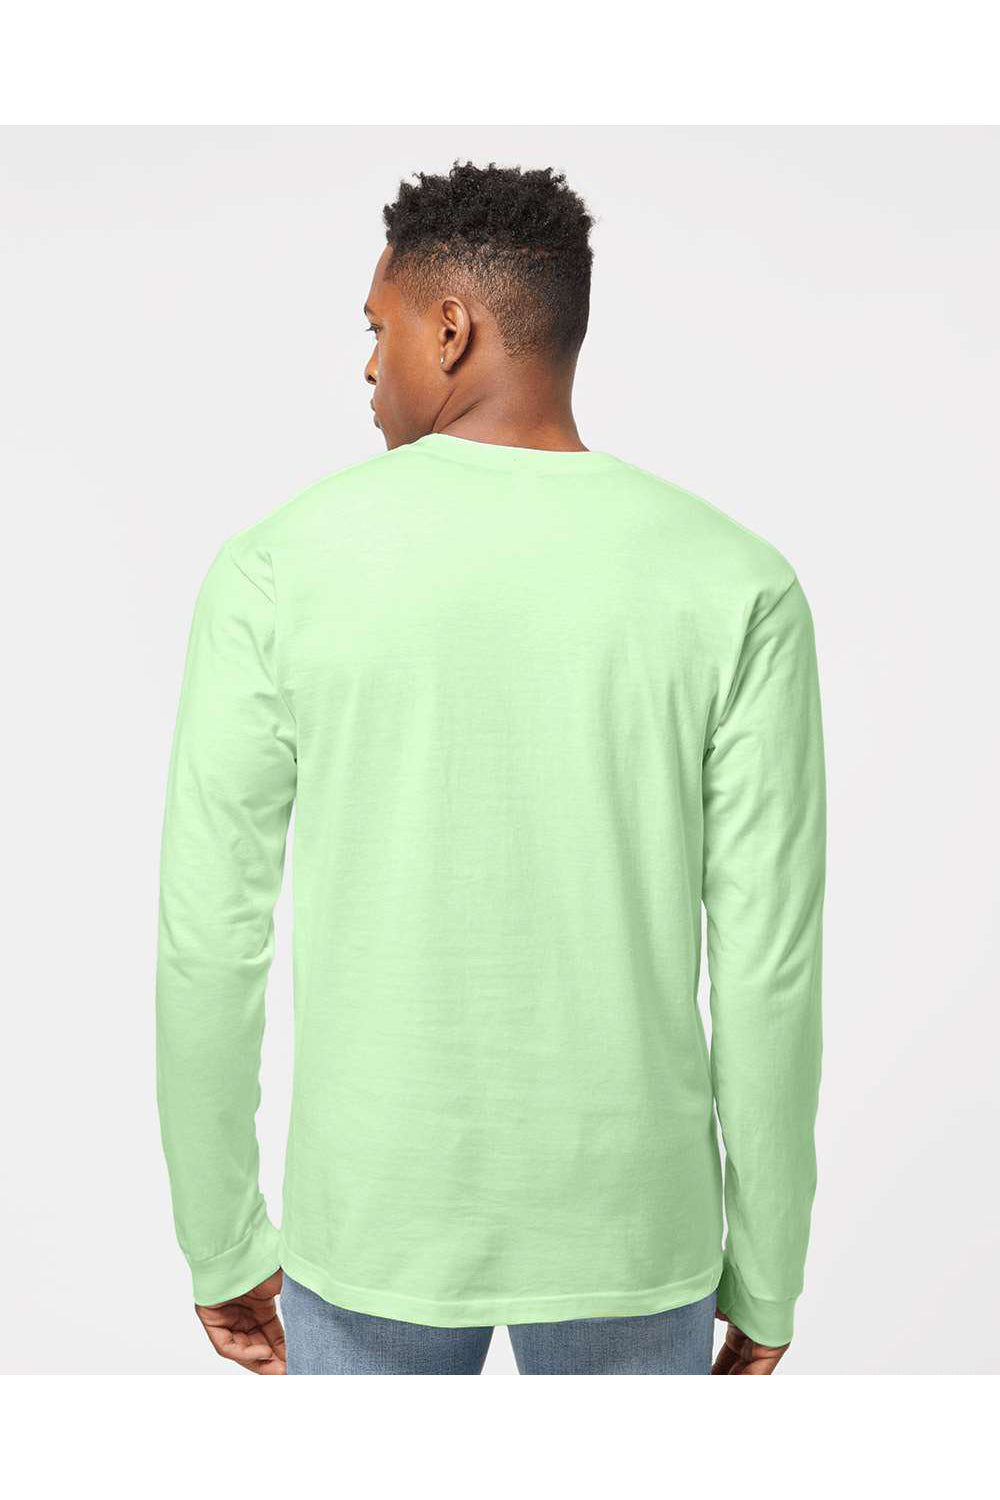 Tultex 291 Mens Jersey Long Sleeve Crewneck T-Shirt Neo Mint Green Model Back